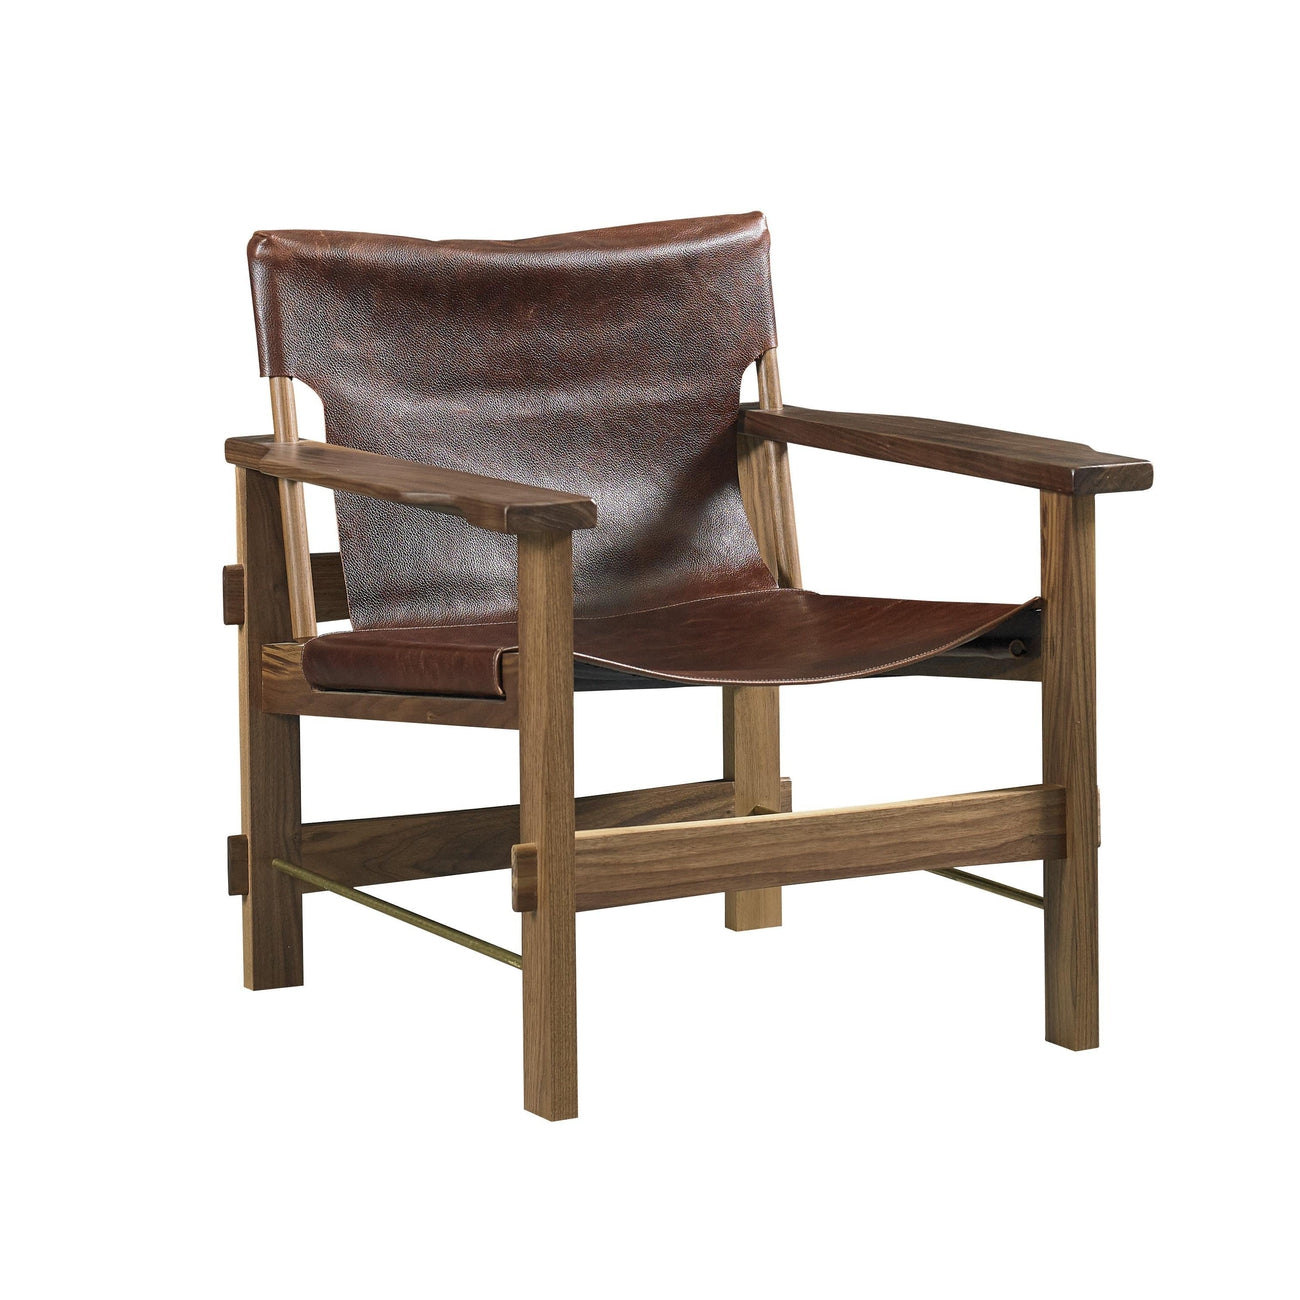 Precedent, Arche Leather Chair